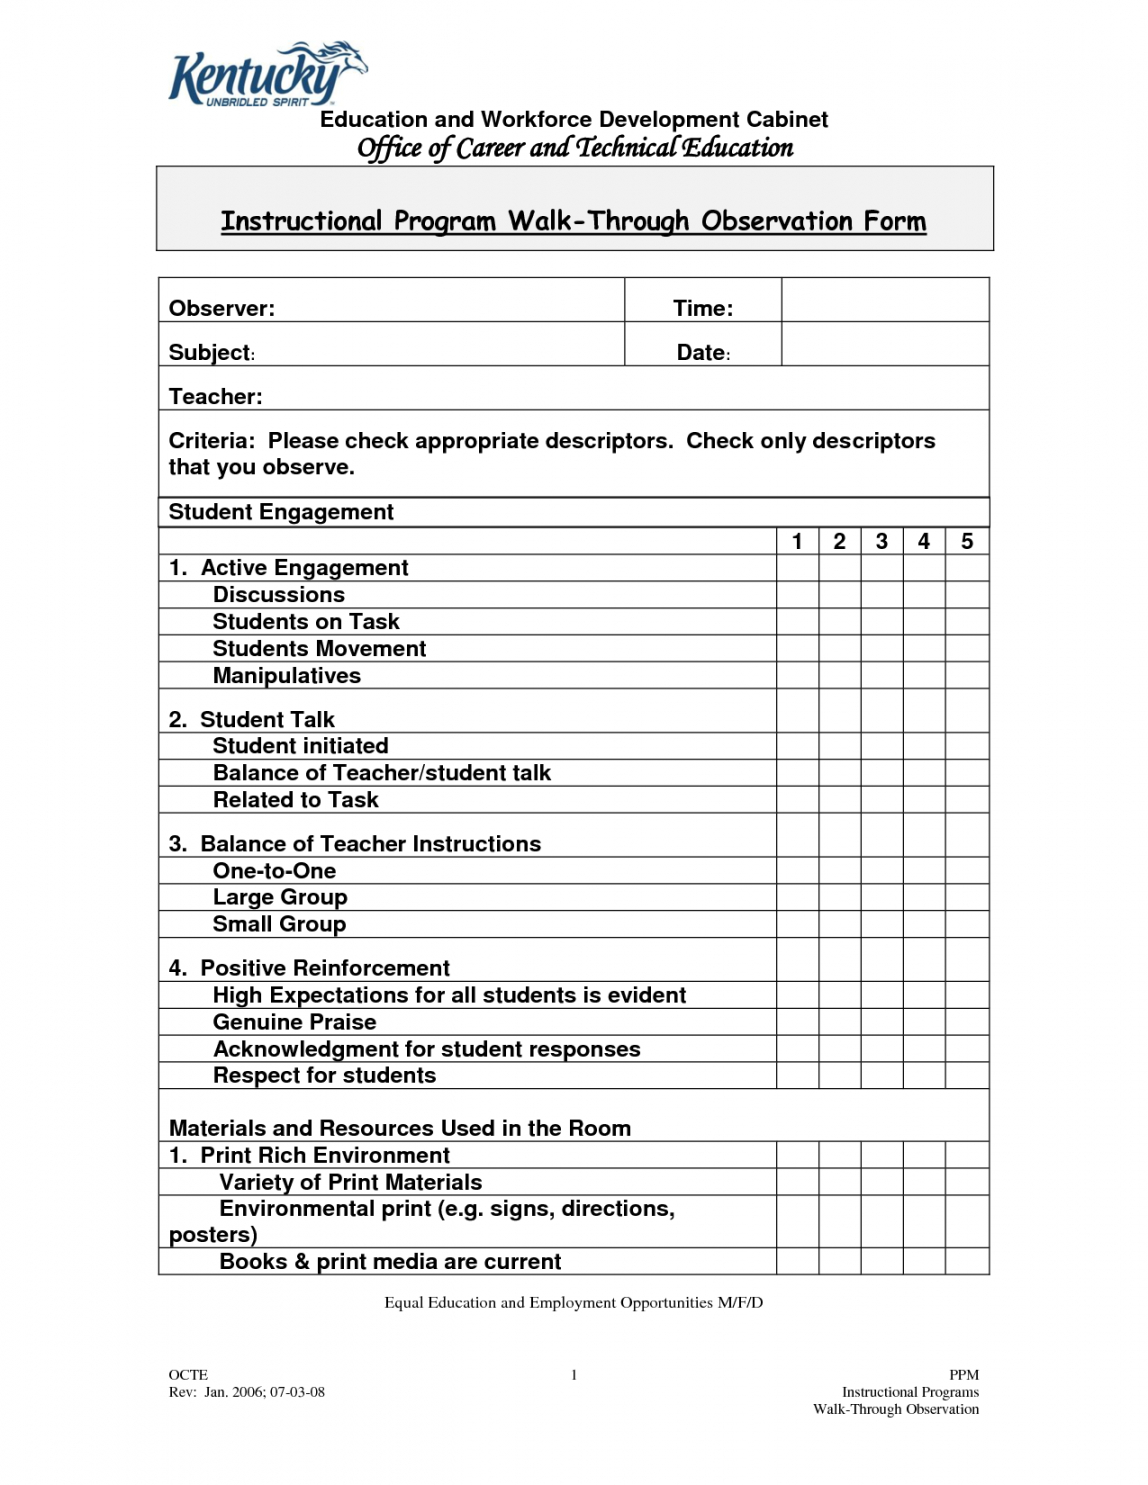 Student Engagement Checklist Template Inside Observation Checklist Template Throughout Observation Checklist Template